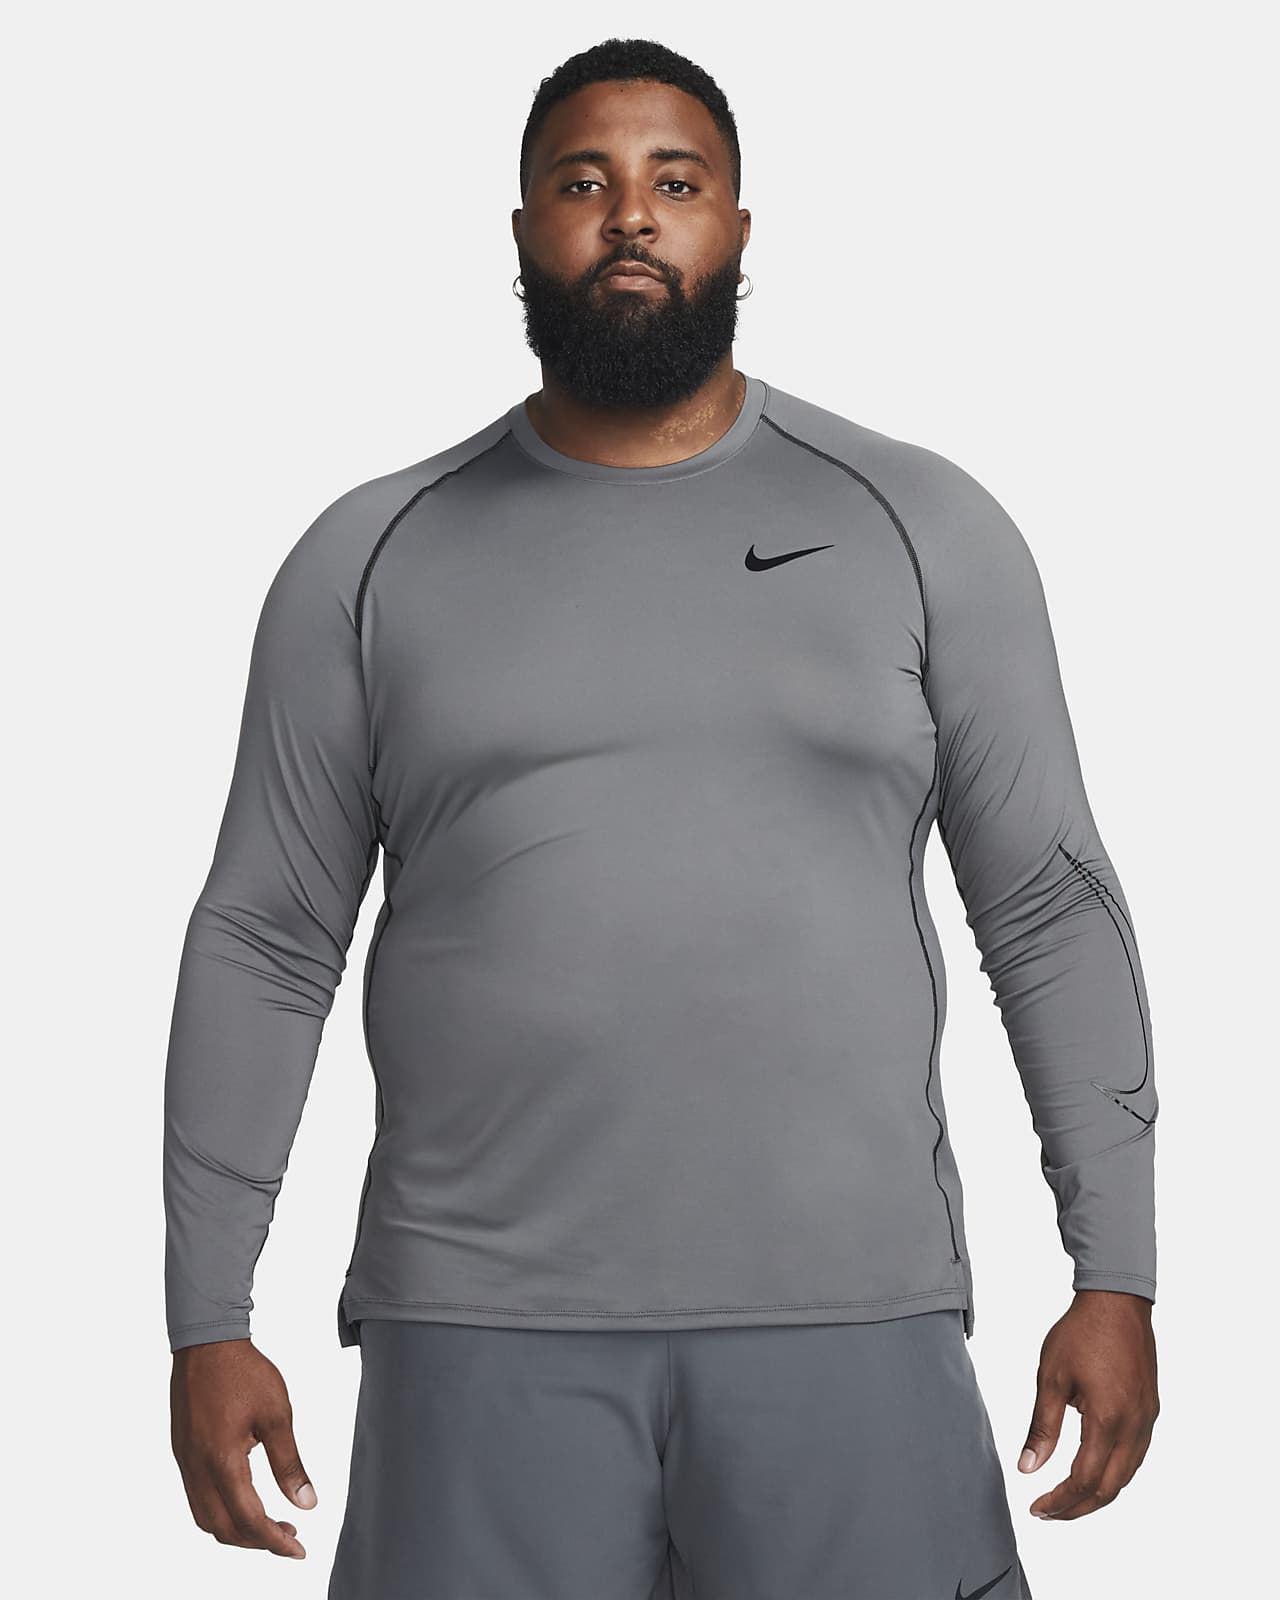 Agnes Gray Cusco Verloren Nike Pro Dri-FIT Men's Slim Fit Long-Sleeve Top. Nike.com